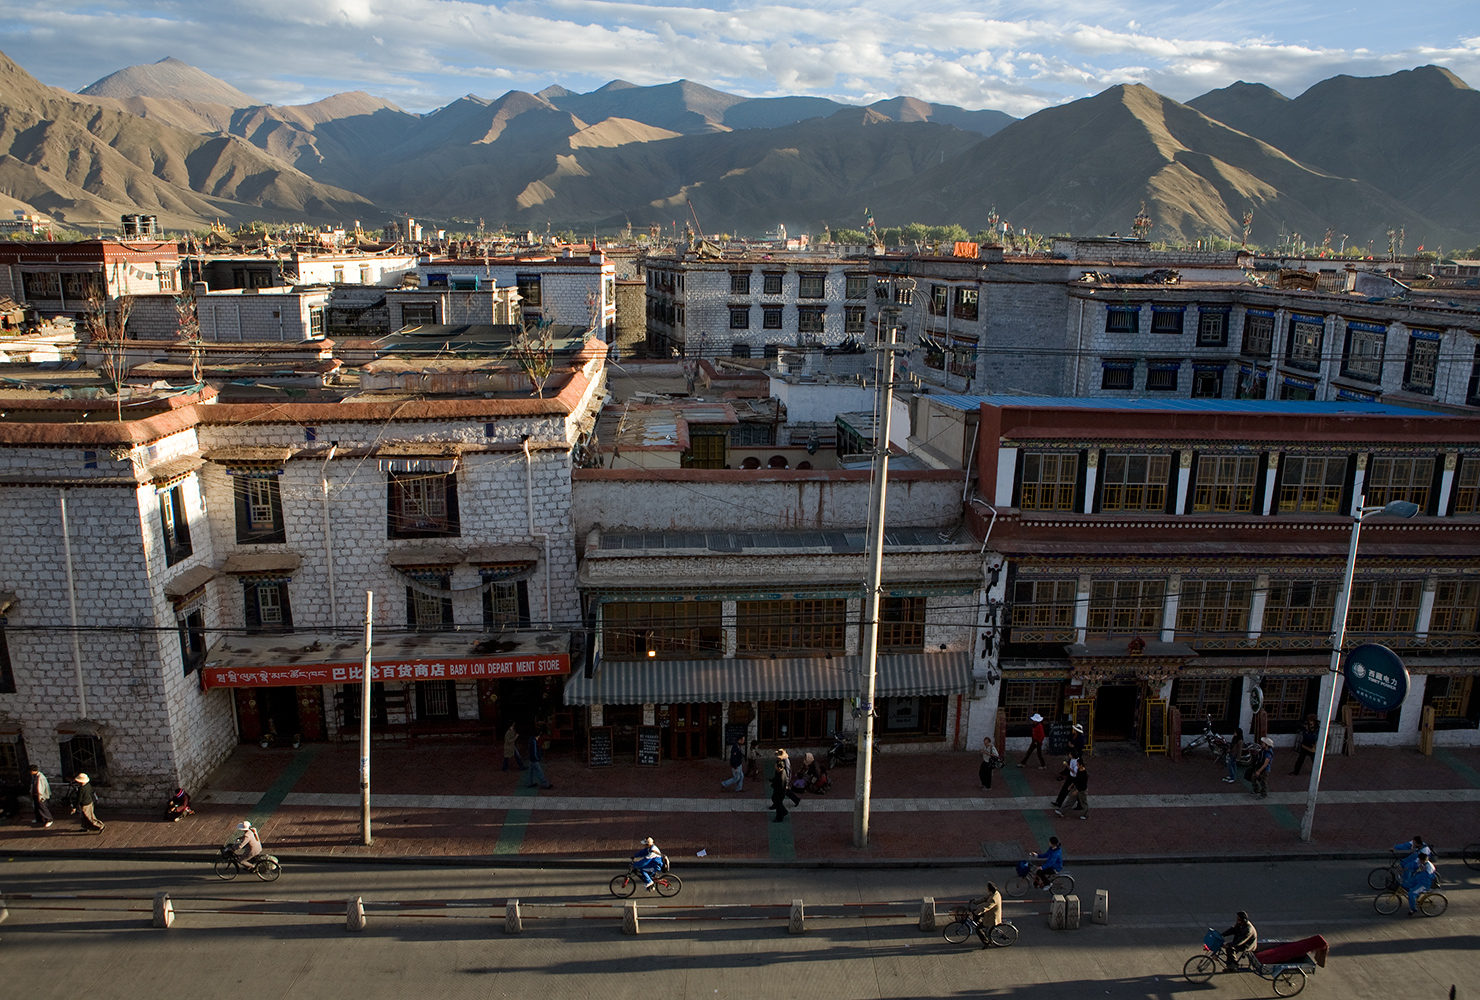  Mountains surround Lhasa, the capital of Tibet. 